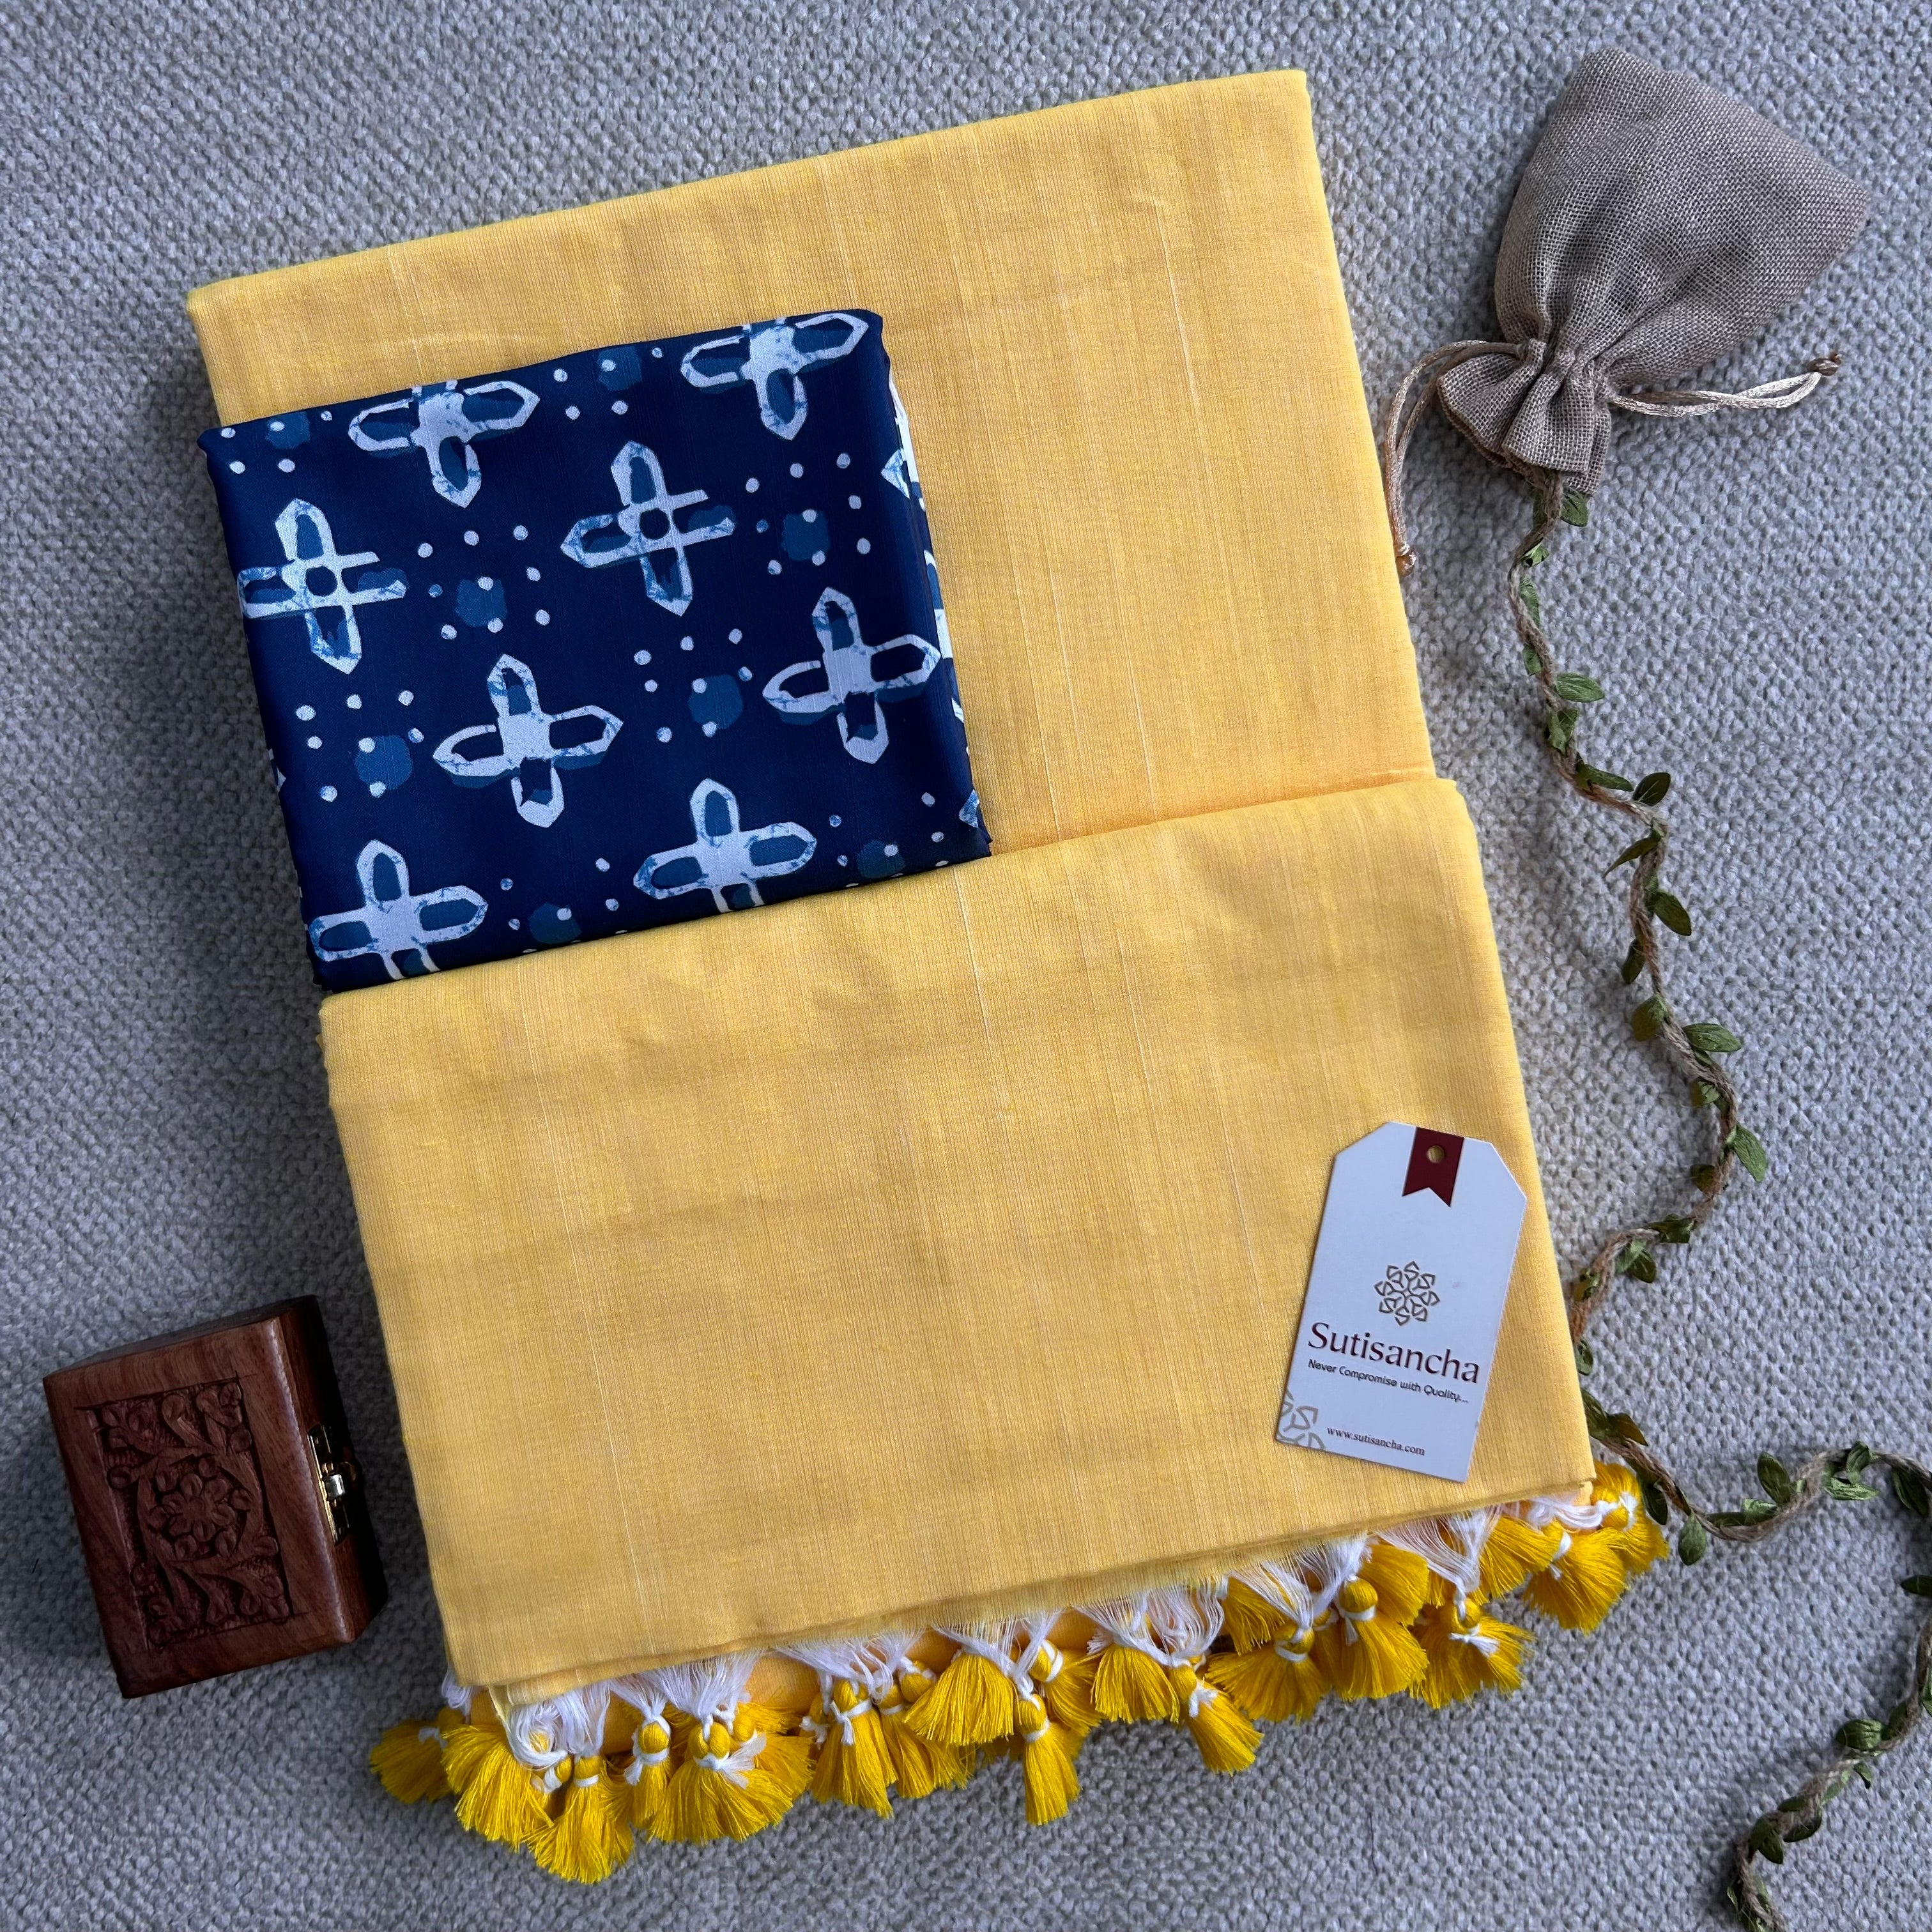 Sutisancha Yellow Colour Handloom Cotton Saree